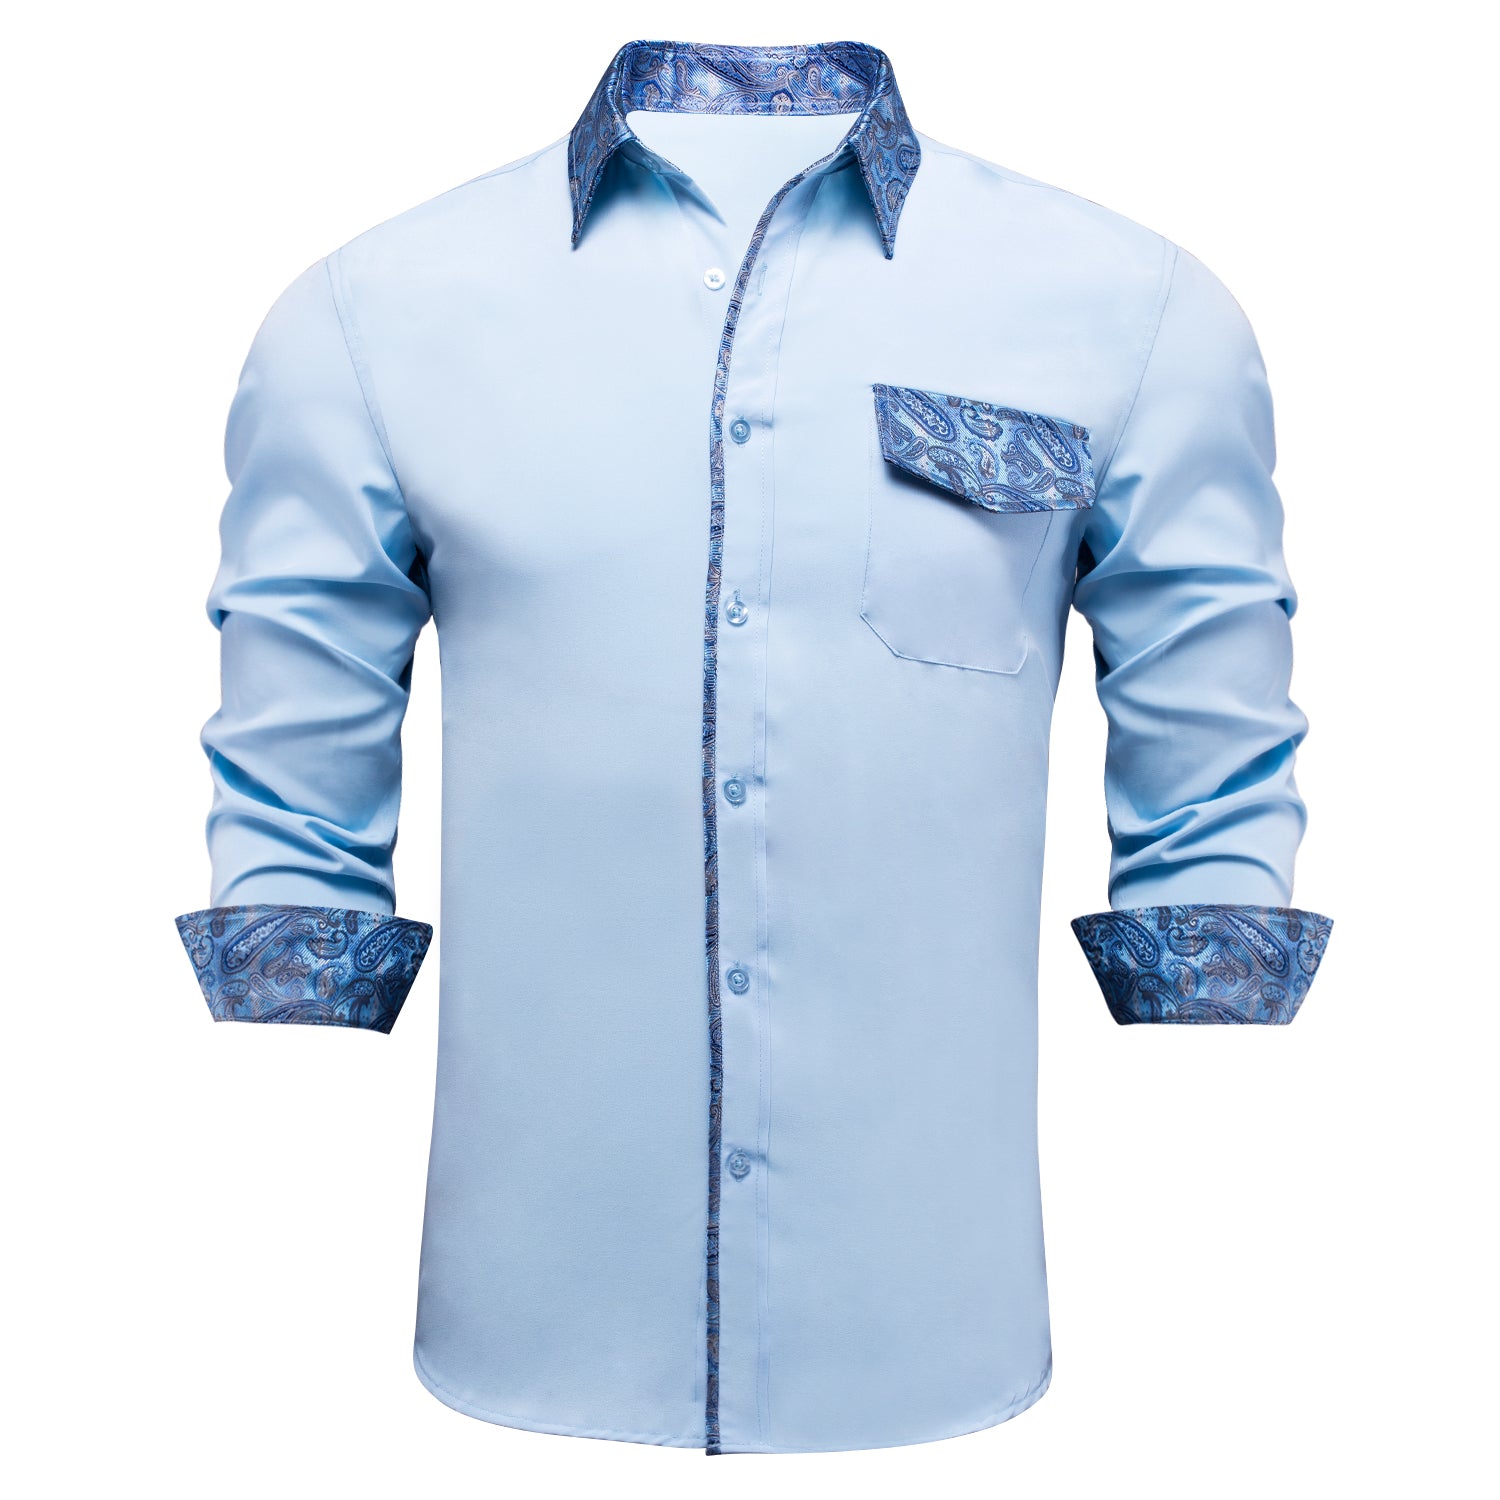 Clearance Sale New Arrival Fresh Light Blue Men's Stitching Shirt